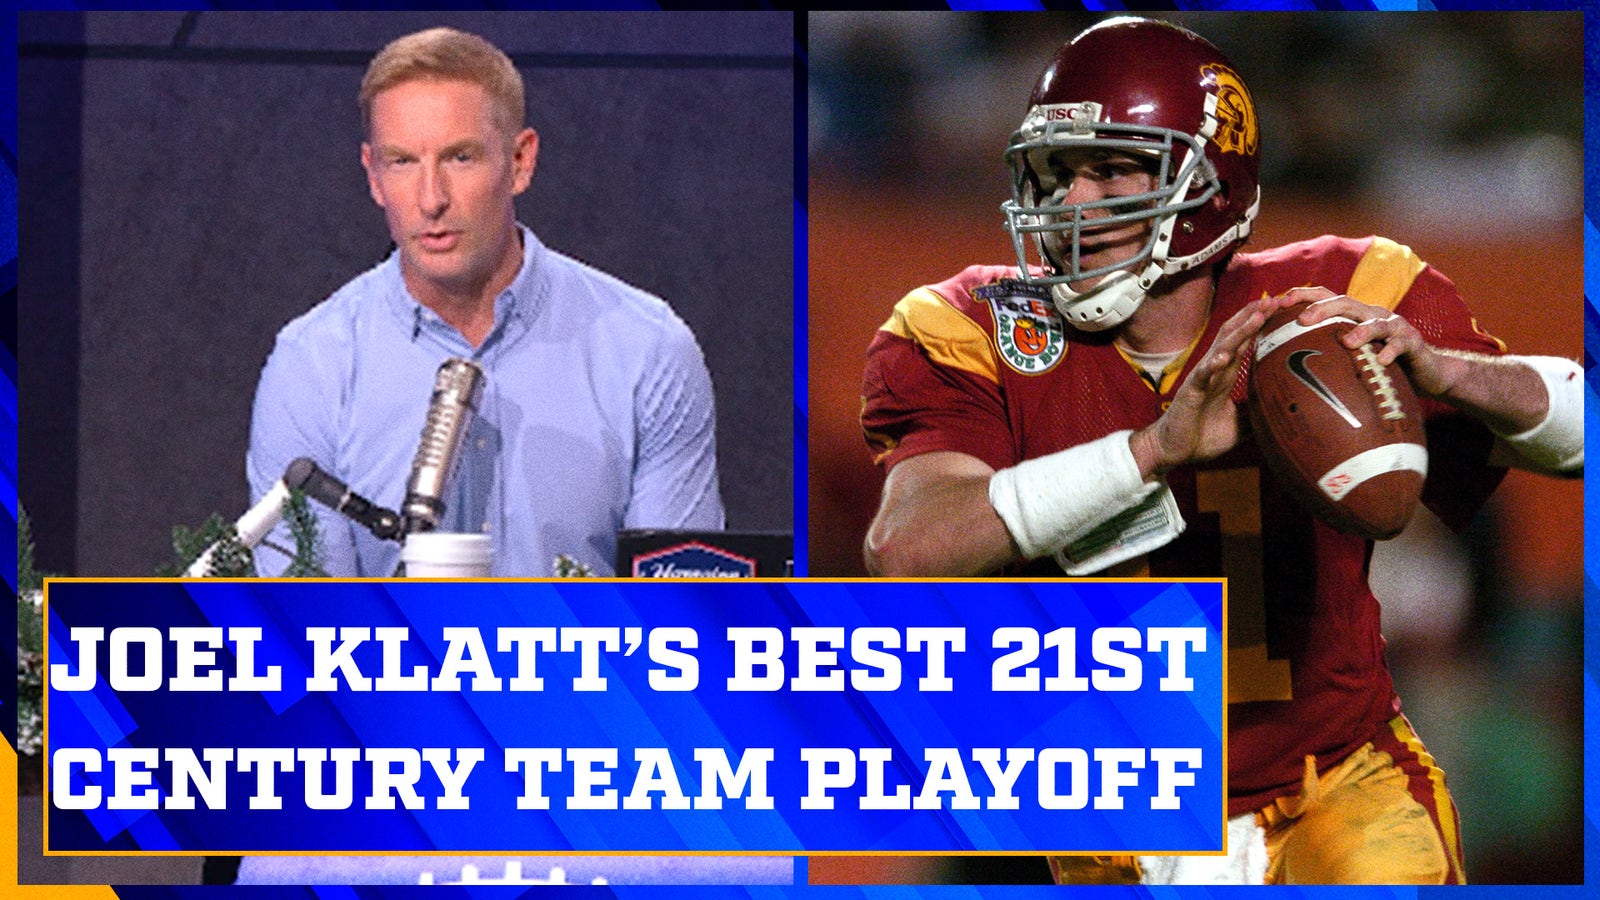 Joel Klatt’s playoff with the best teams in the 21st century